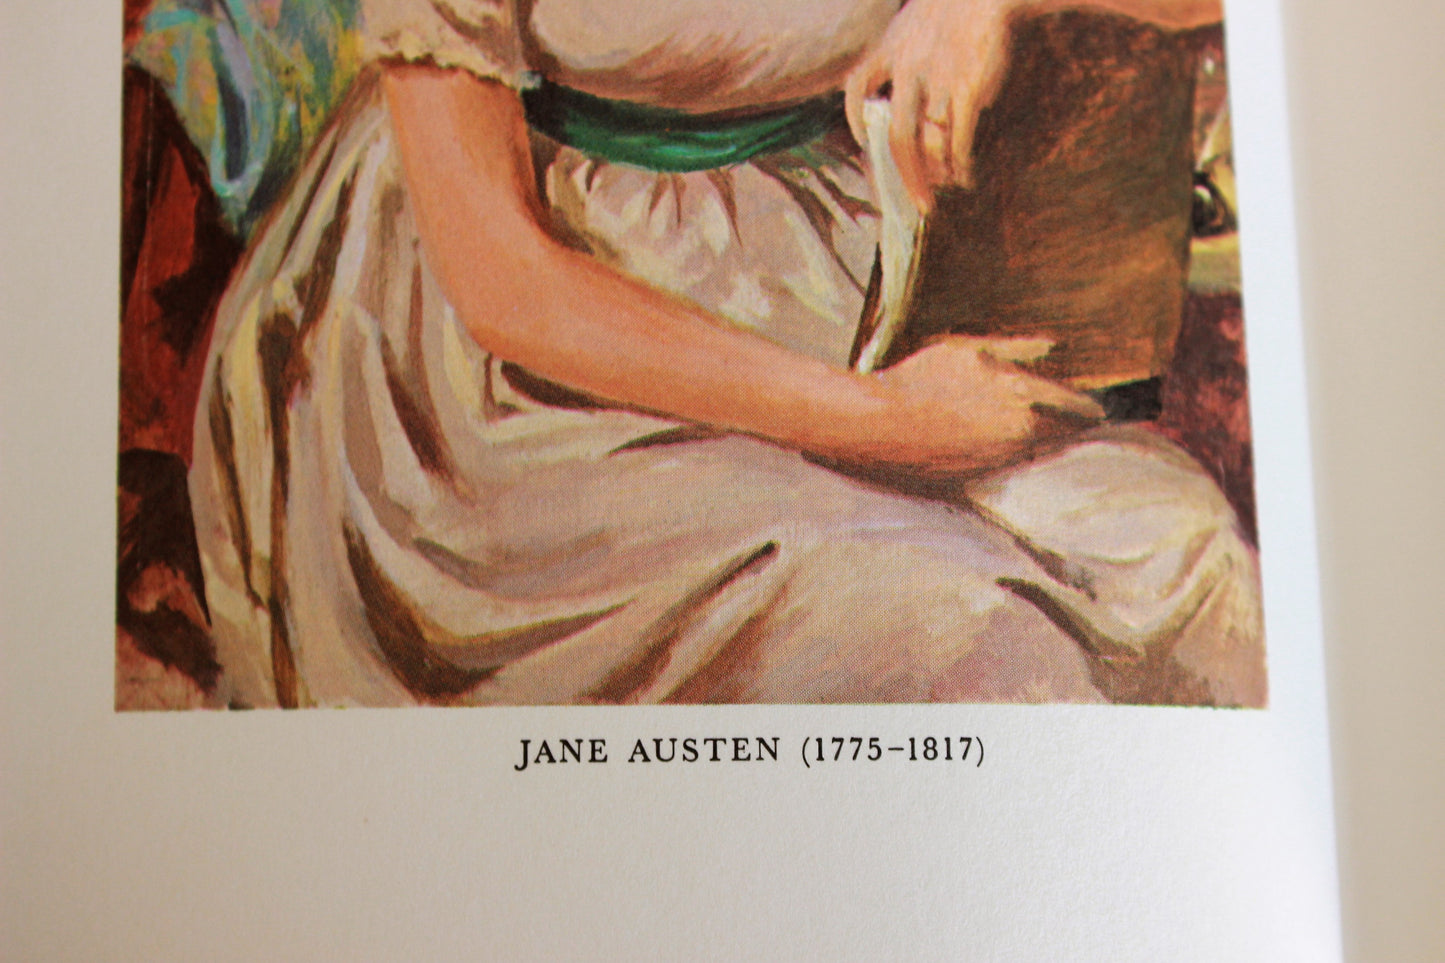 Vintage 1970s Jane Susten's Pride and Prejudice, Easton Press Collector's Edition.